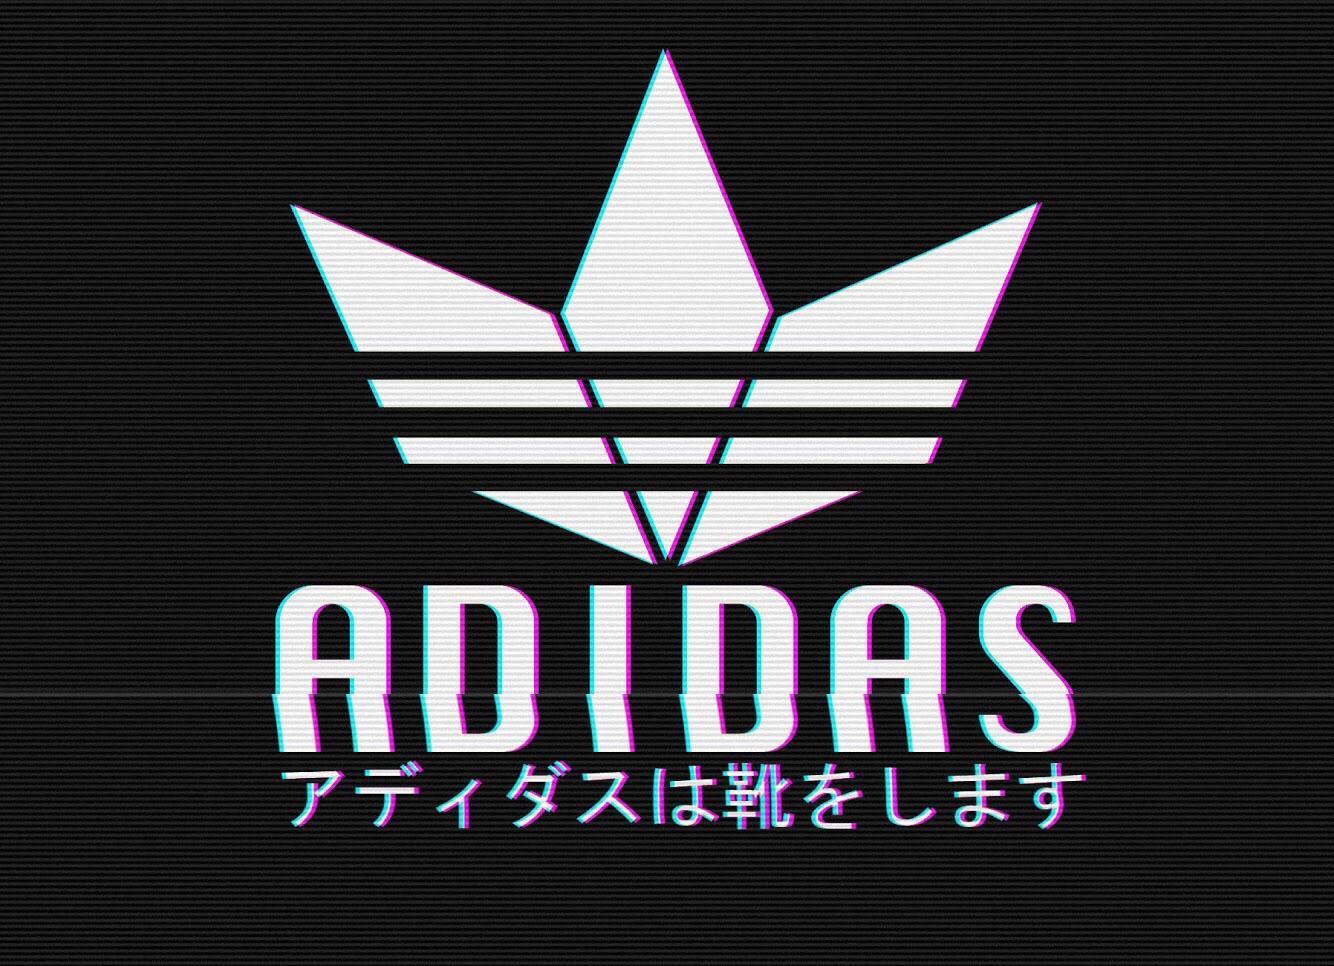 Sick Adidas Logo - My contribution to the ongoing logo saga : Cyberpunk